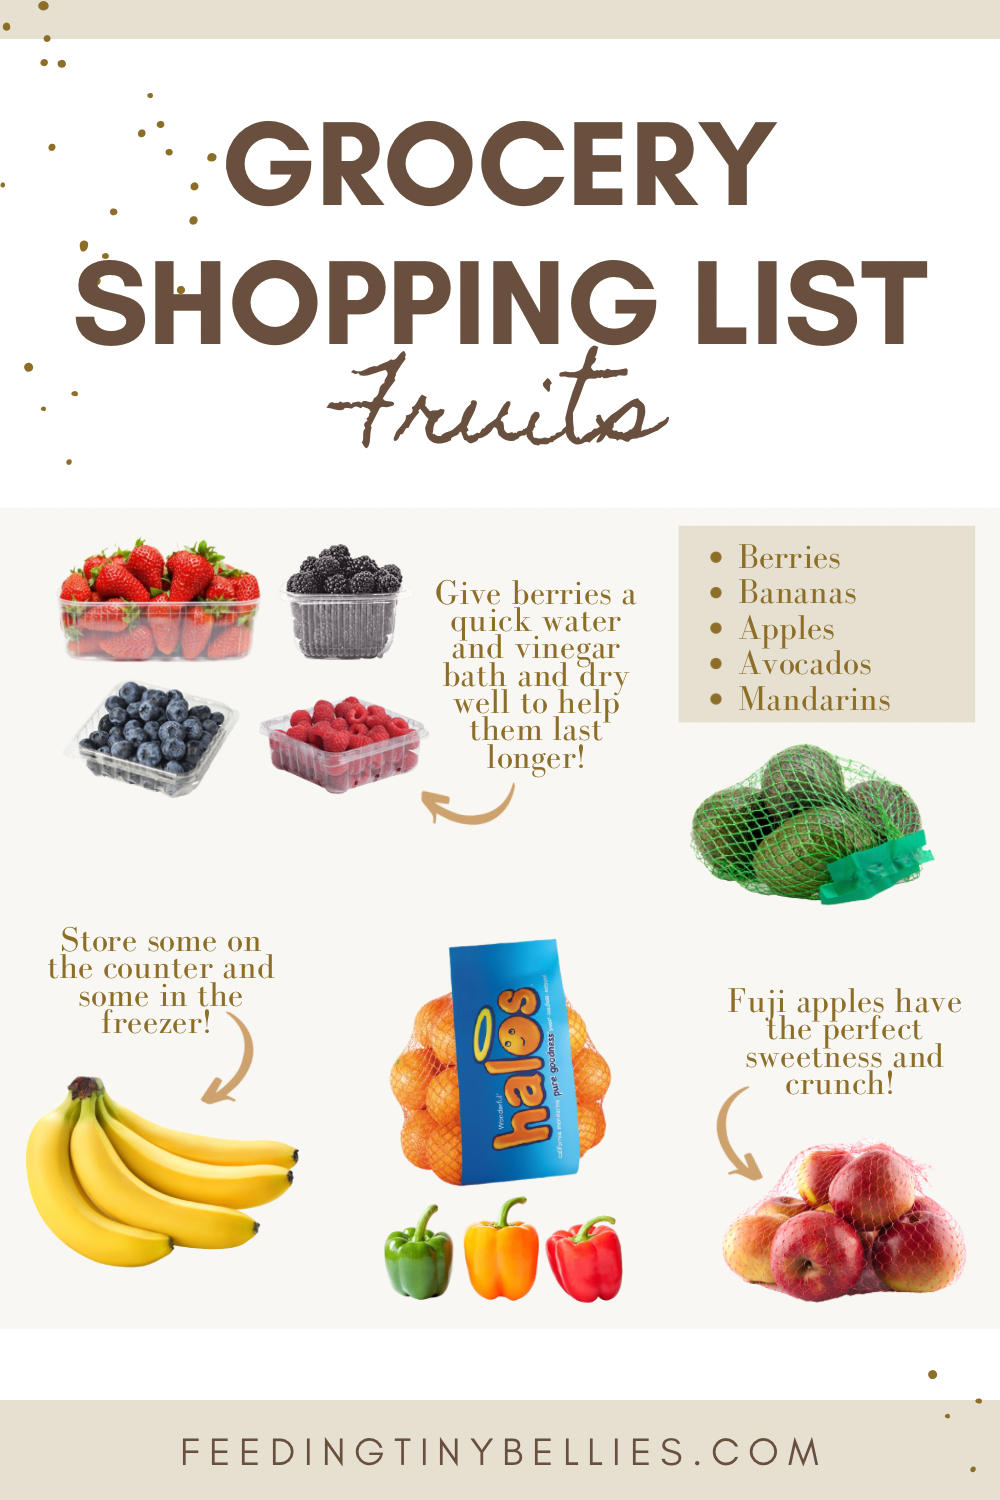 Grocery shopping list fruits: berries, bananas, apples, avocados, mandarins